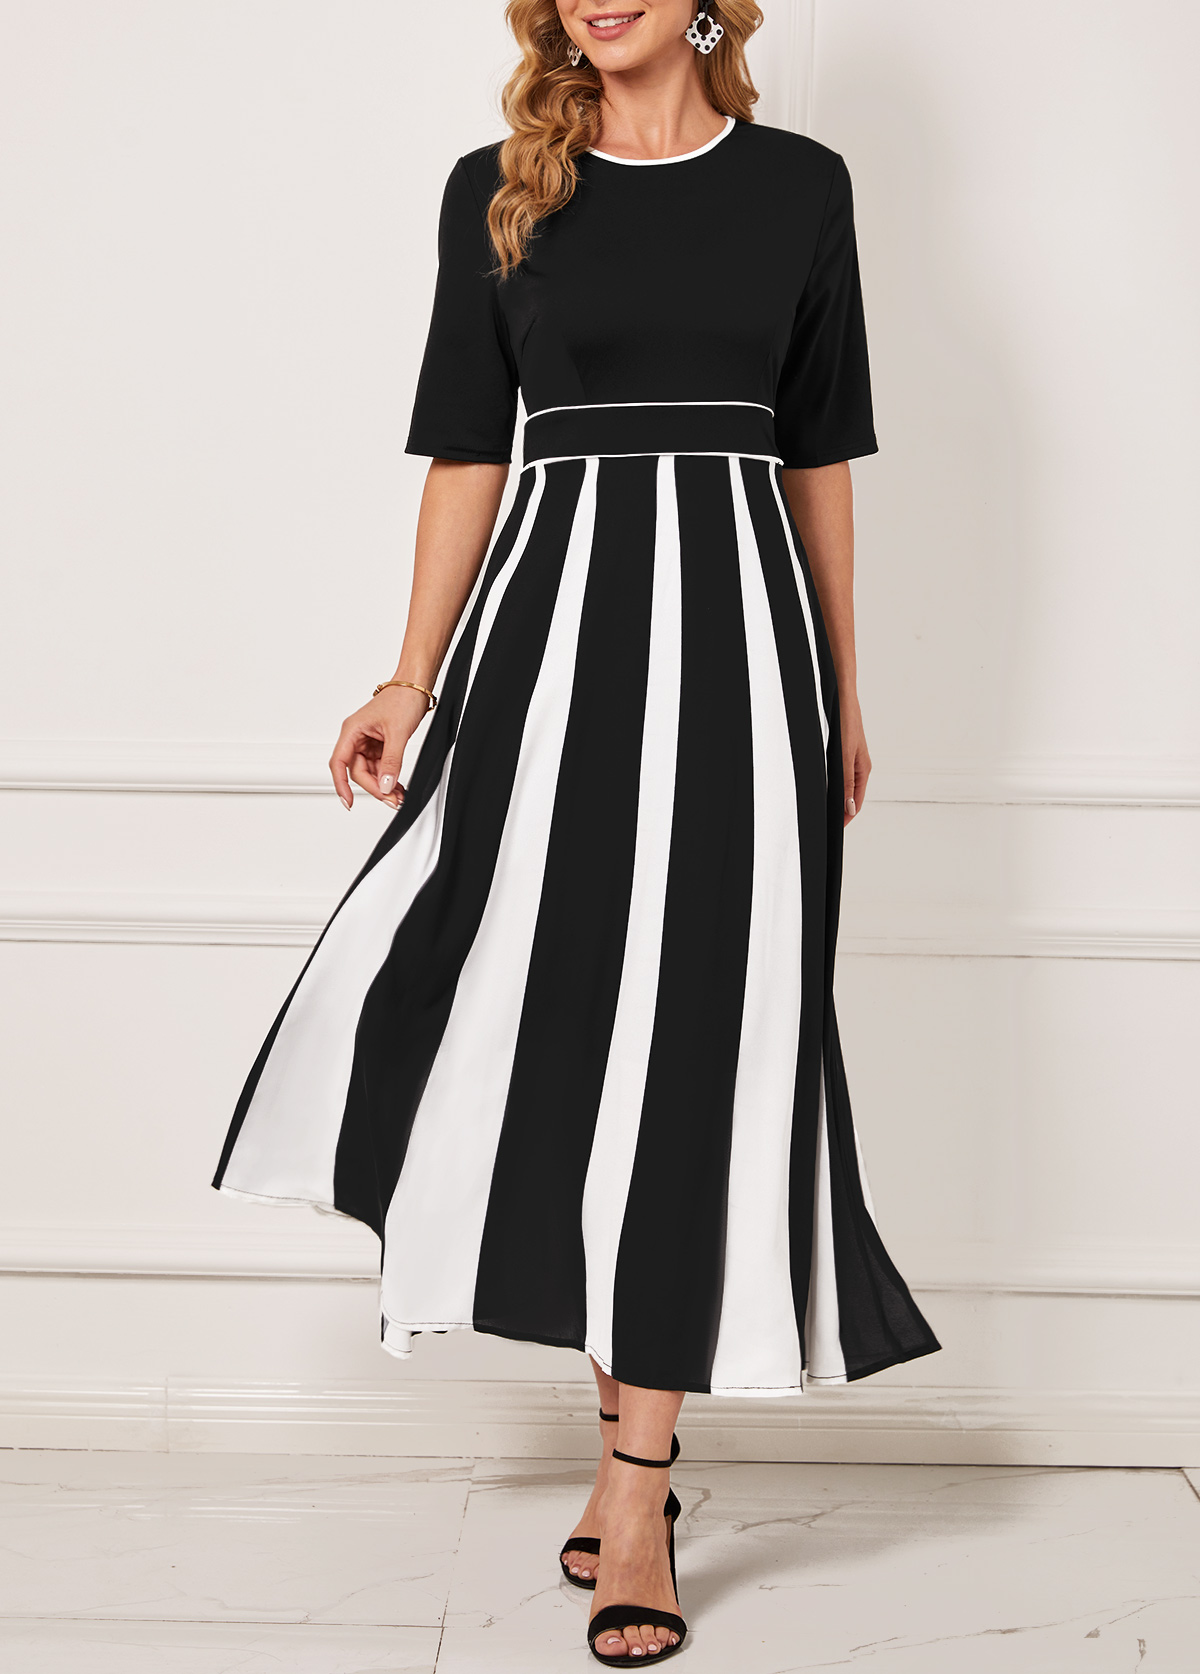 Monochrome Stripe Round Neck Black Dress